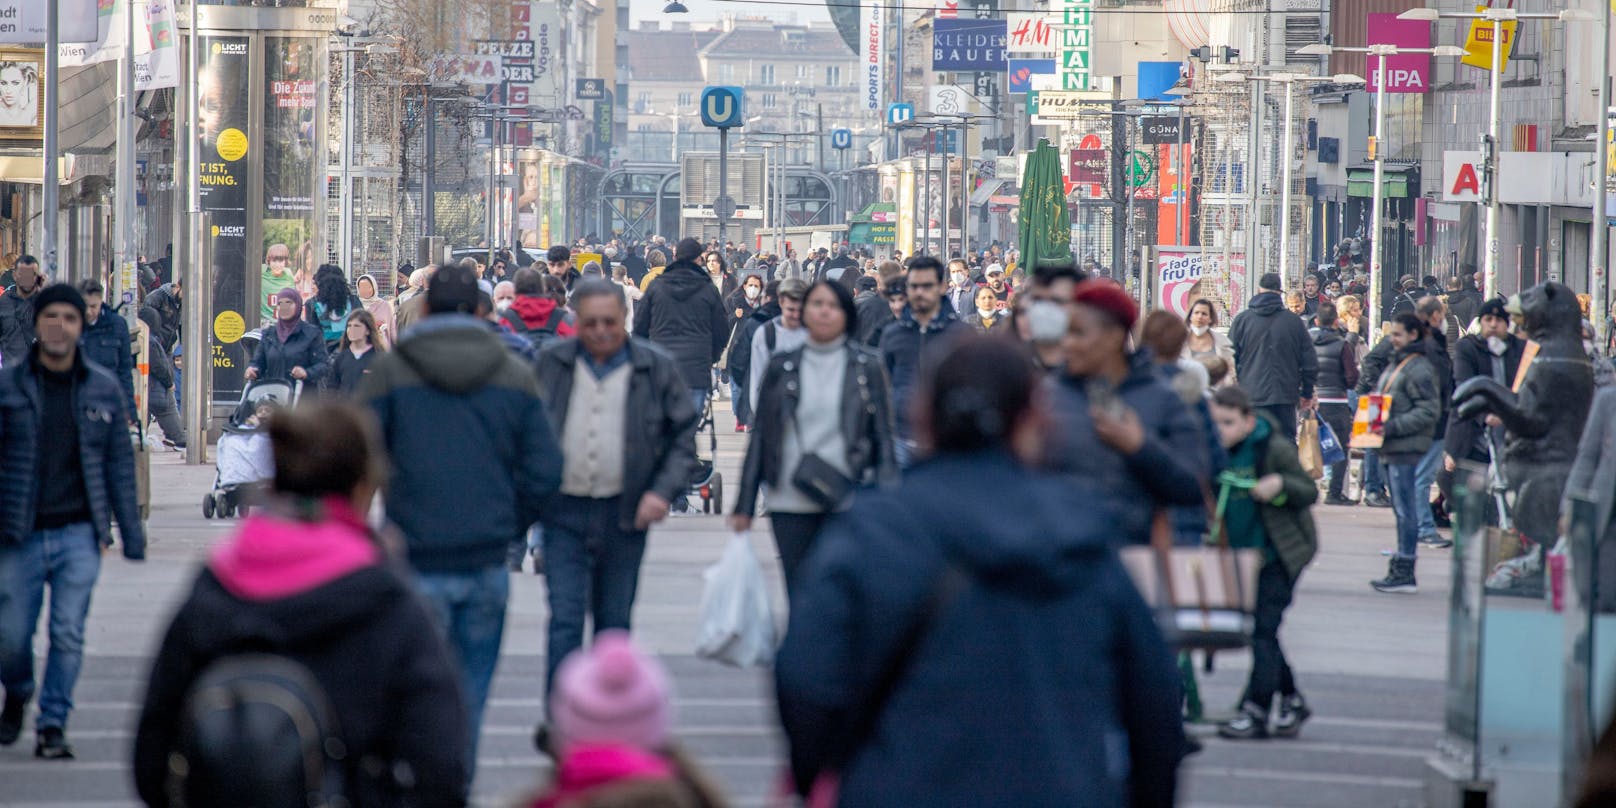 Trotz Corona-Boom: So sieht es auf Wiens Straßen aus